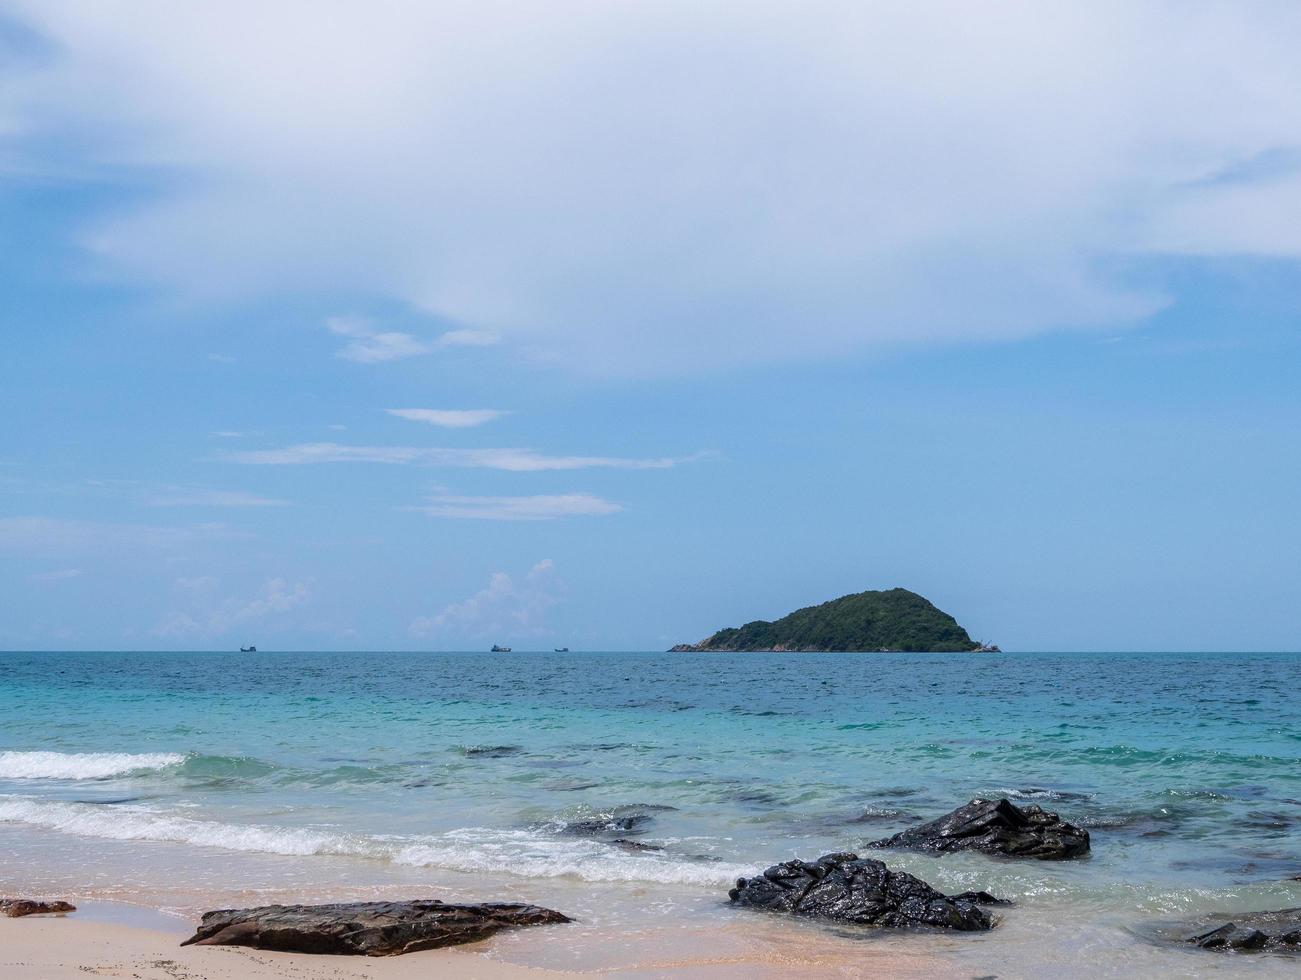 landschap zomer voorkant visie tropisch zee strand rots blauw wit zand achtergrond kalmte natuur oceaan mooi Golf Botsing spatten water reizen nang RAM strand oosten- Thailand chonburi exotisch horizon. foto